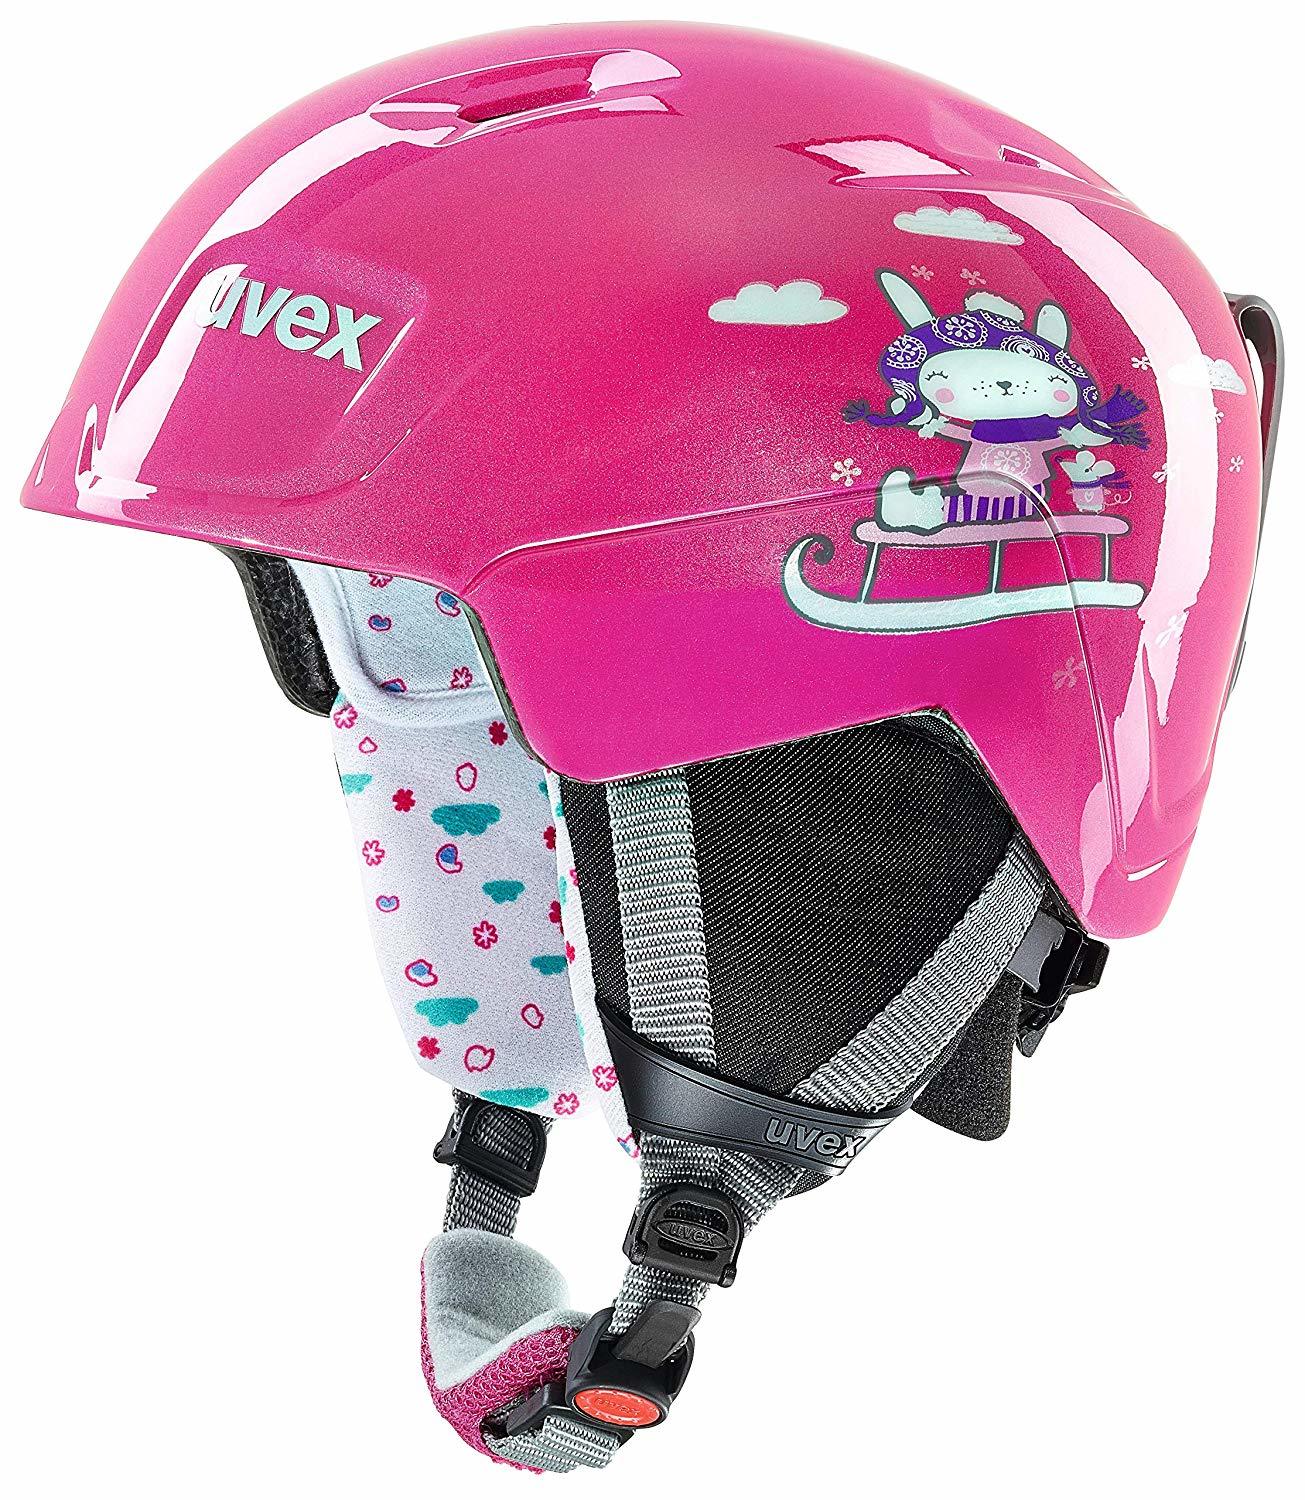 VUDA Shark Ski Snowboard Helmet Cover Snow Cool Fun Winter Helmet Accessory 